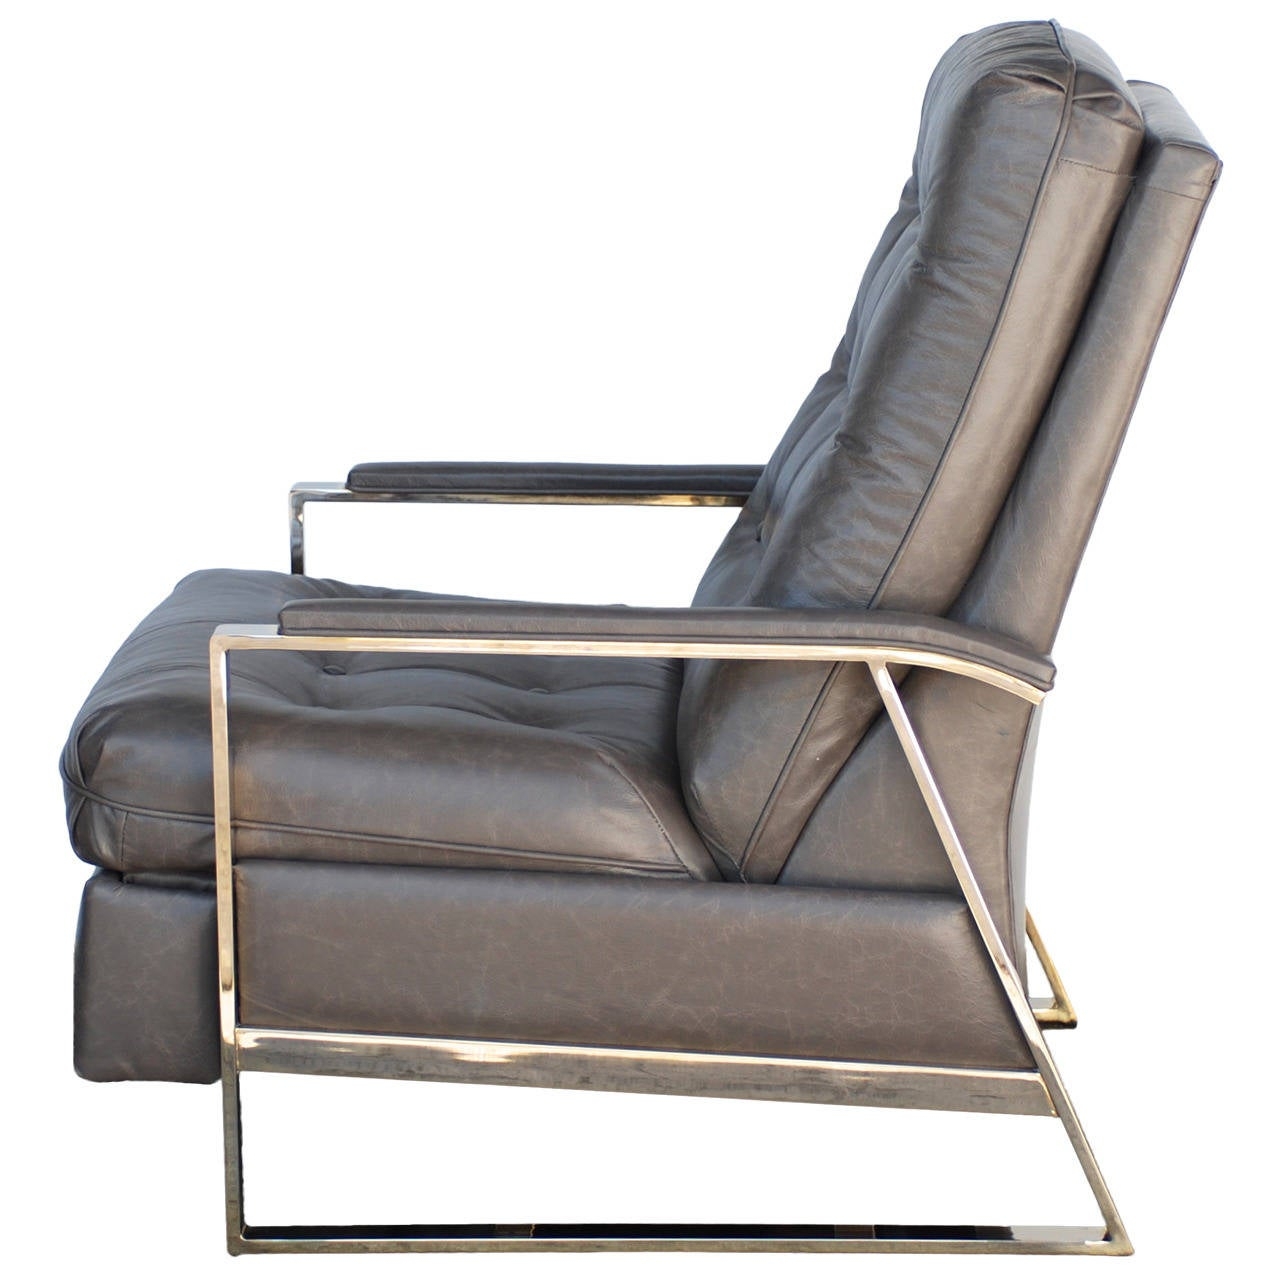 Baughman grey leather recliner